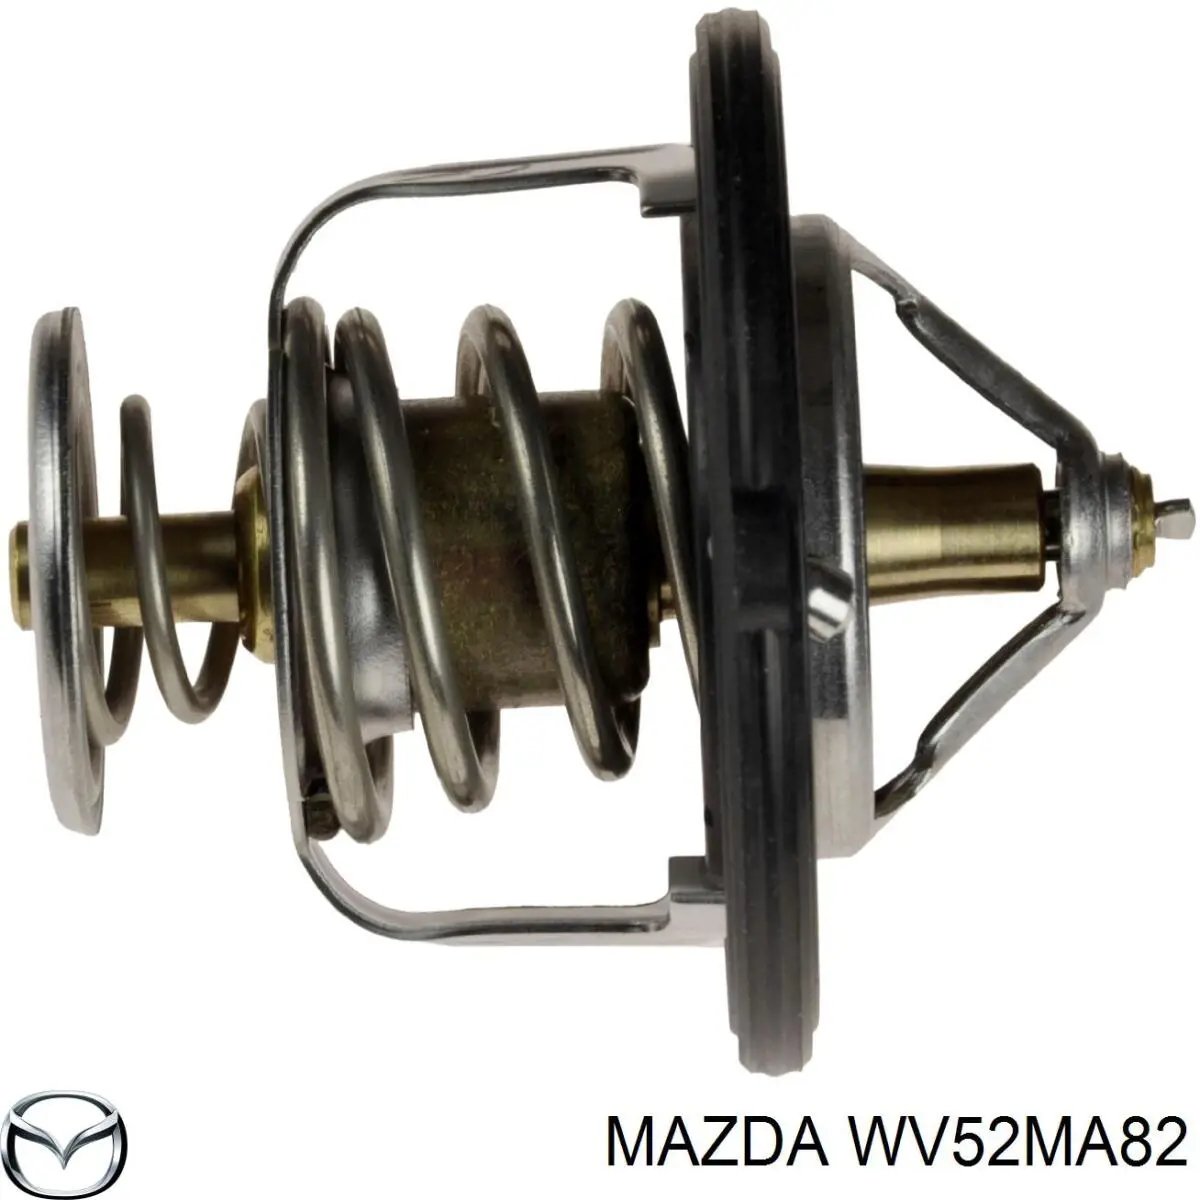 WV52MA82 Mazda termostato